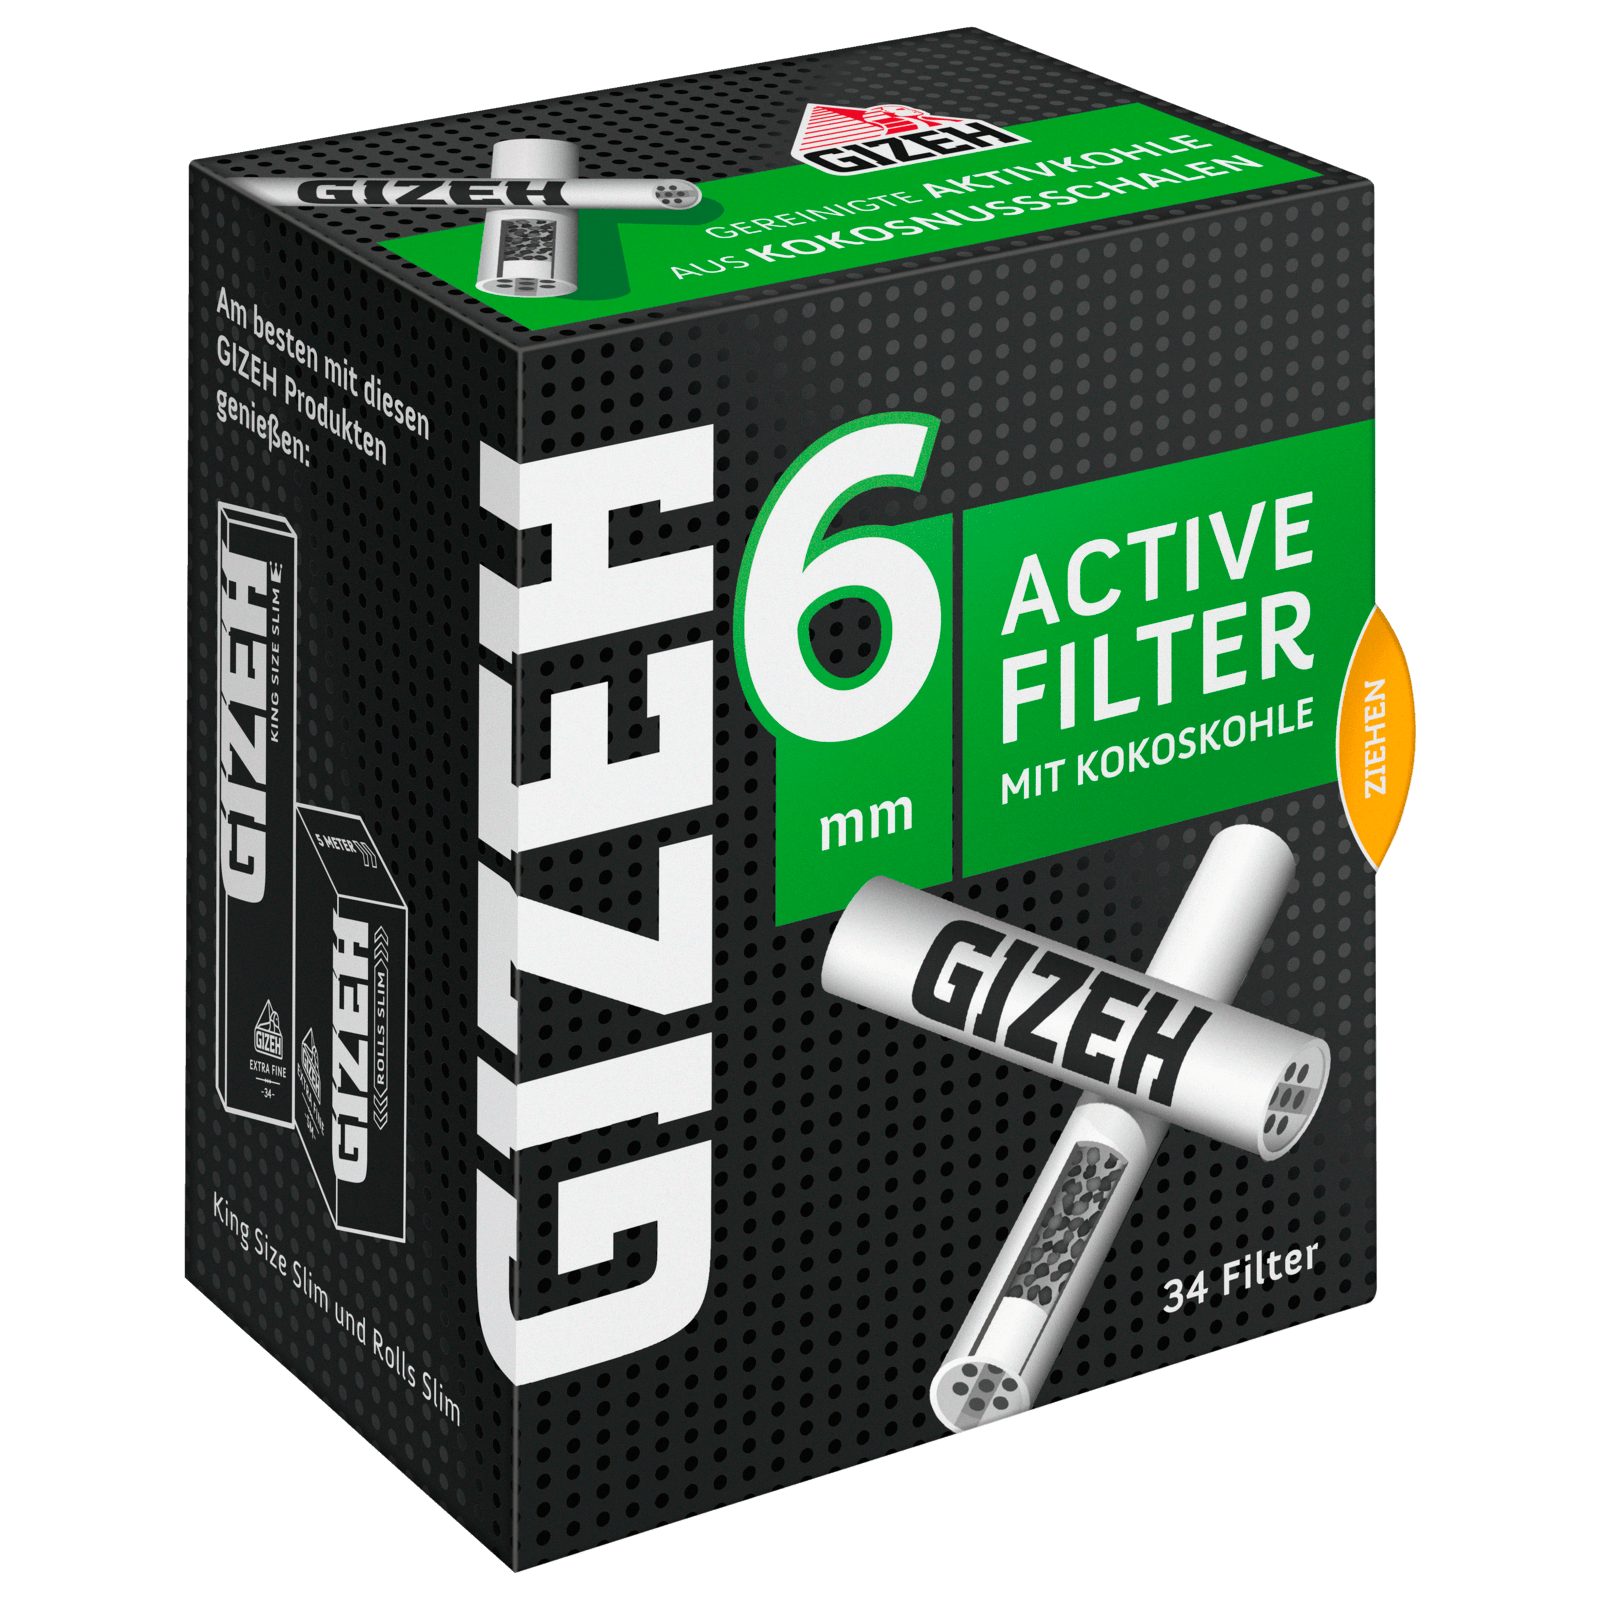 Gizeh Active Filter 6mm 34 Stück bei REWE online bestellen!